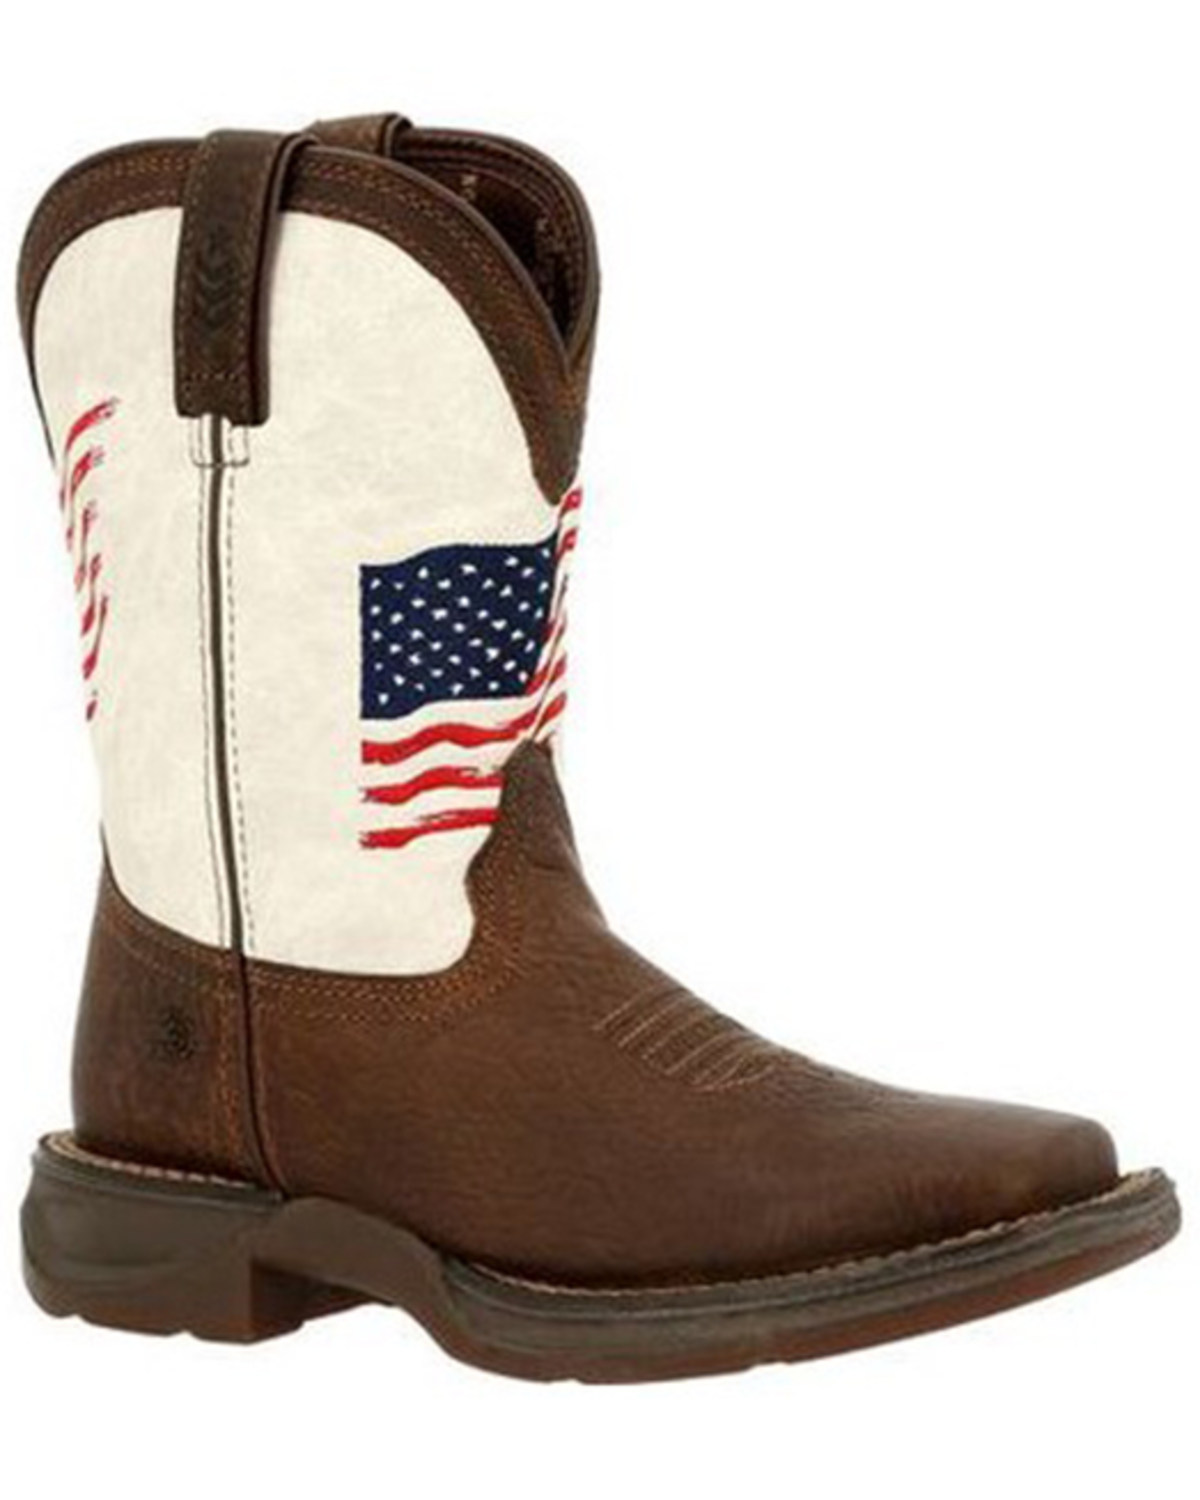 Durango Boys' Rebel Distressed Flag Western Boots - Square Toe